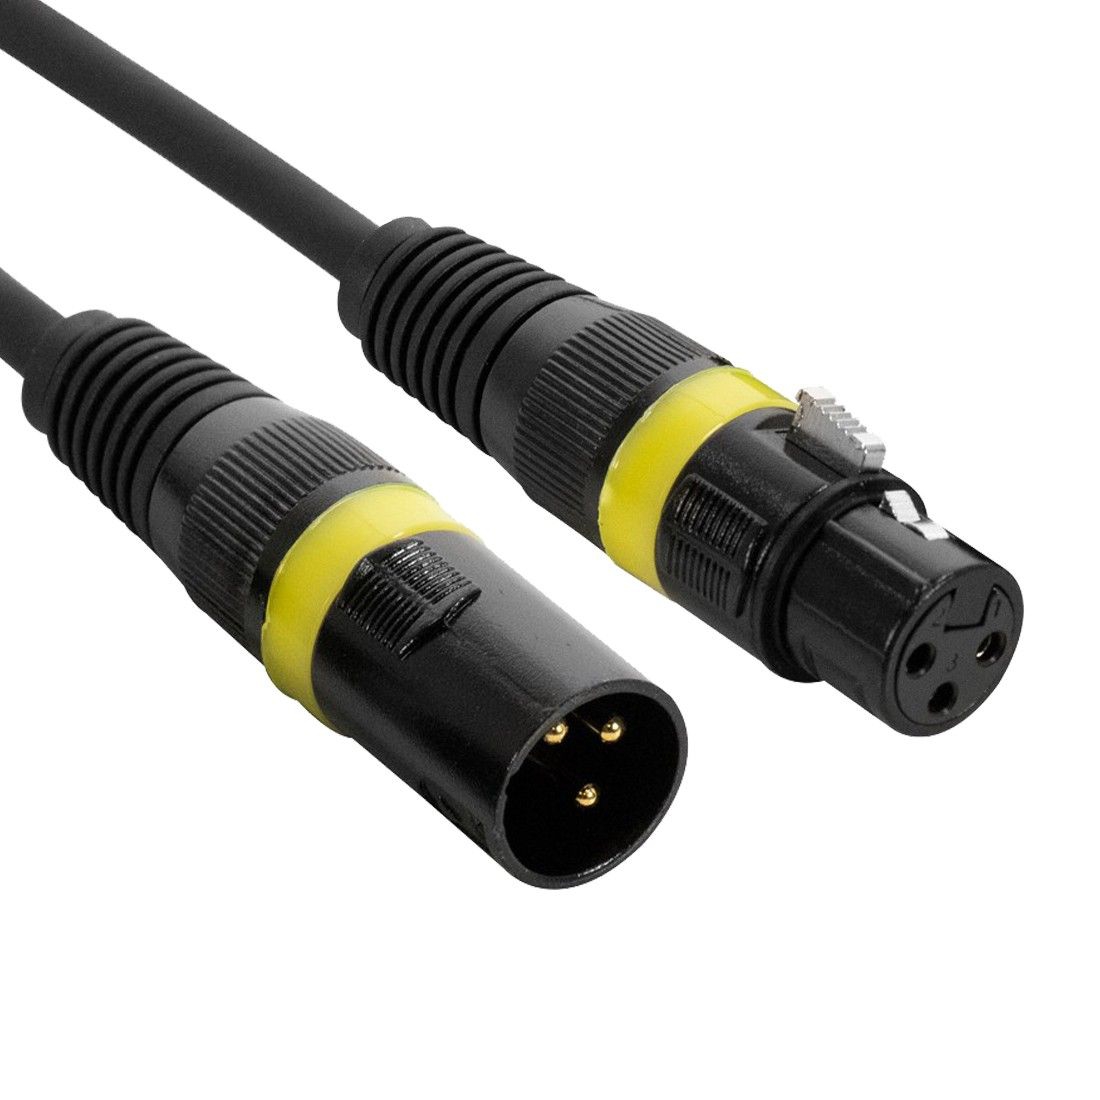 Accu Cable AC-DMX3/30 3 p. XLRm/3 p. XLRf 30m DMX